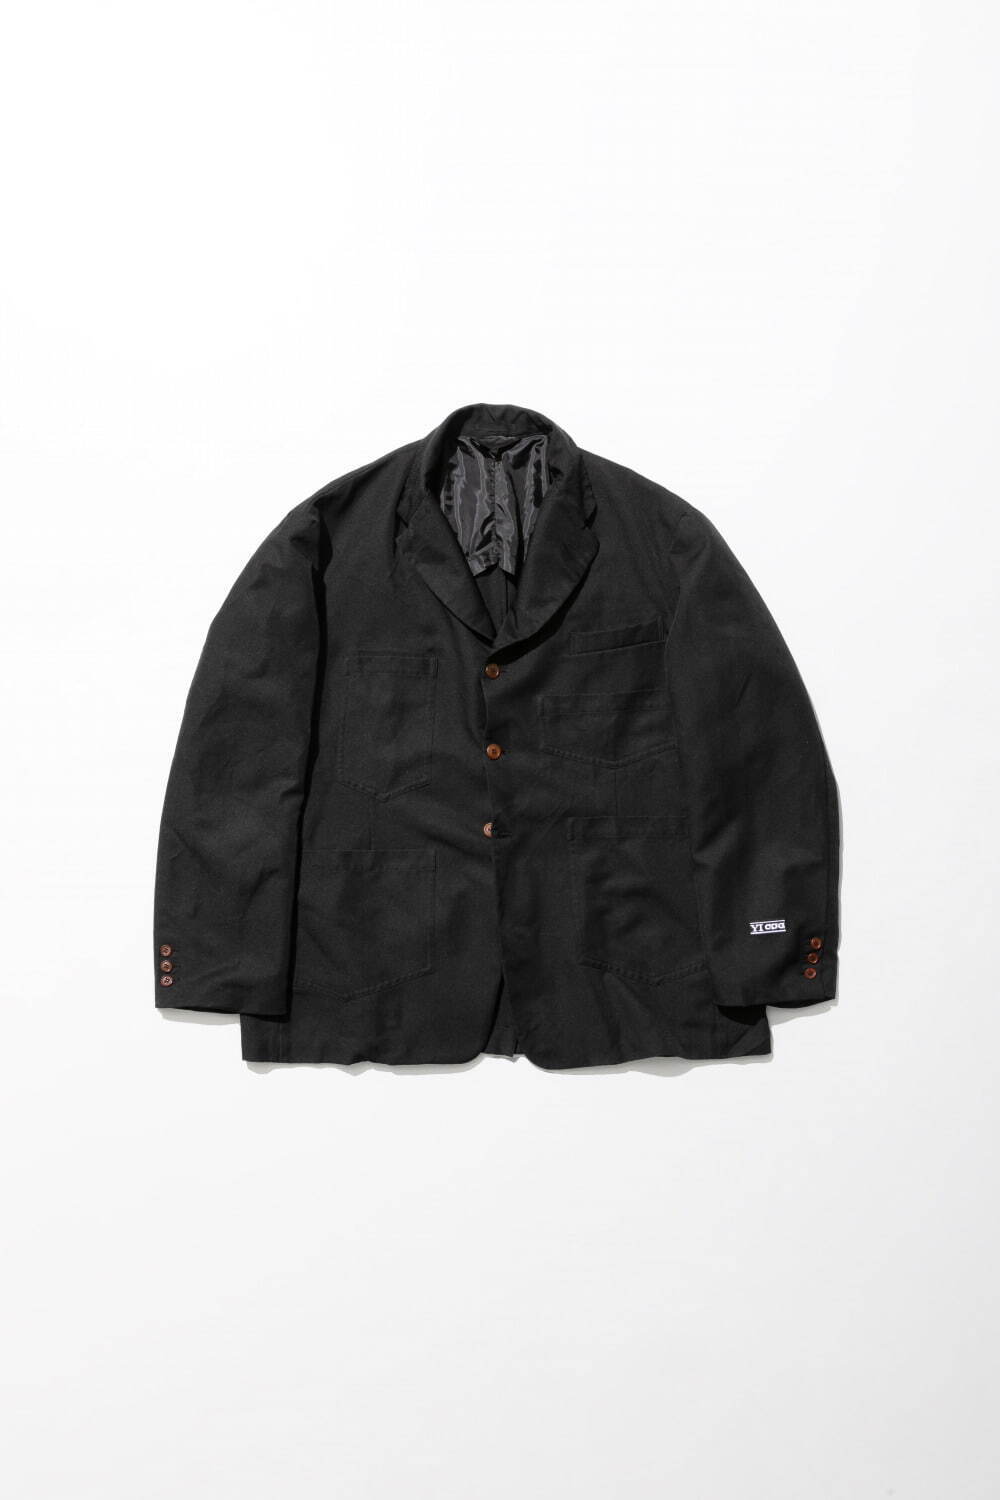 OVERSIZED JACKET polyester twill garment treated 85,800円